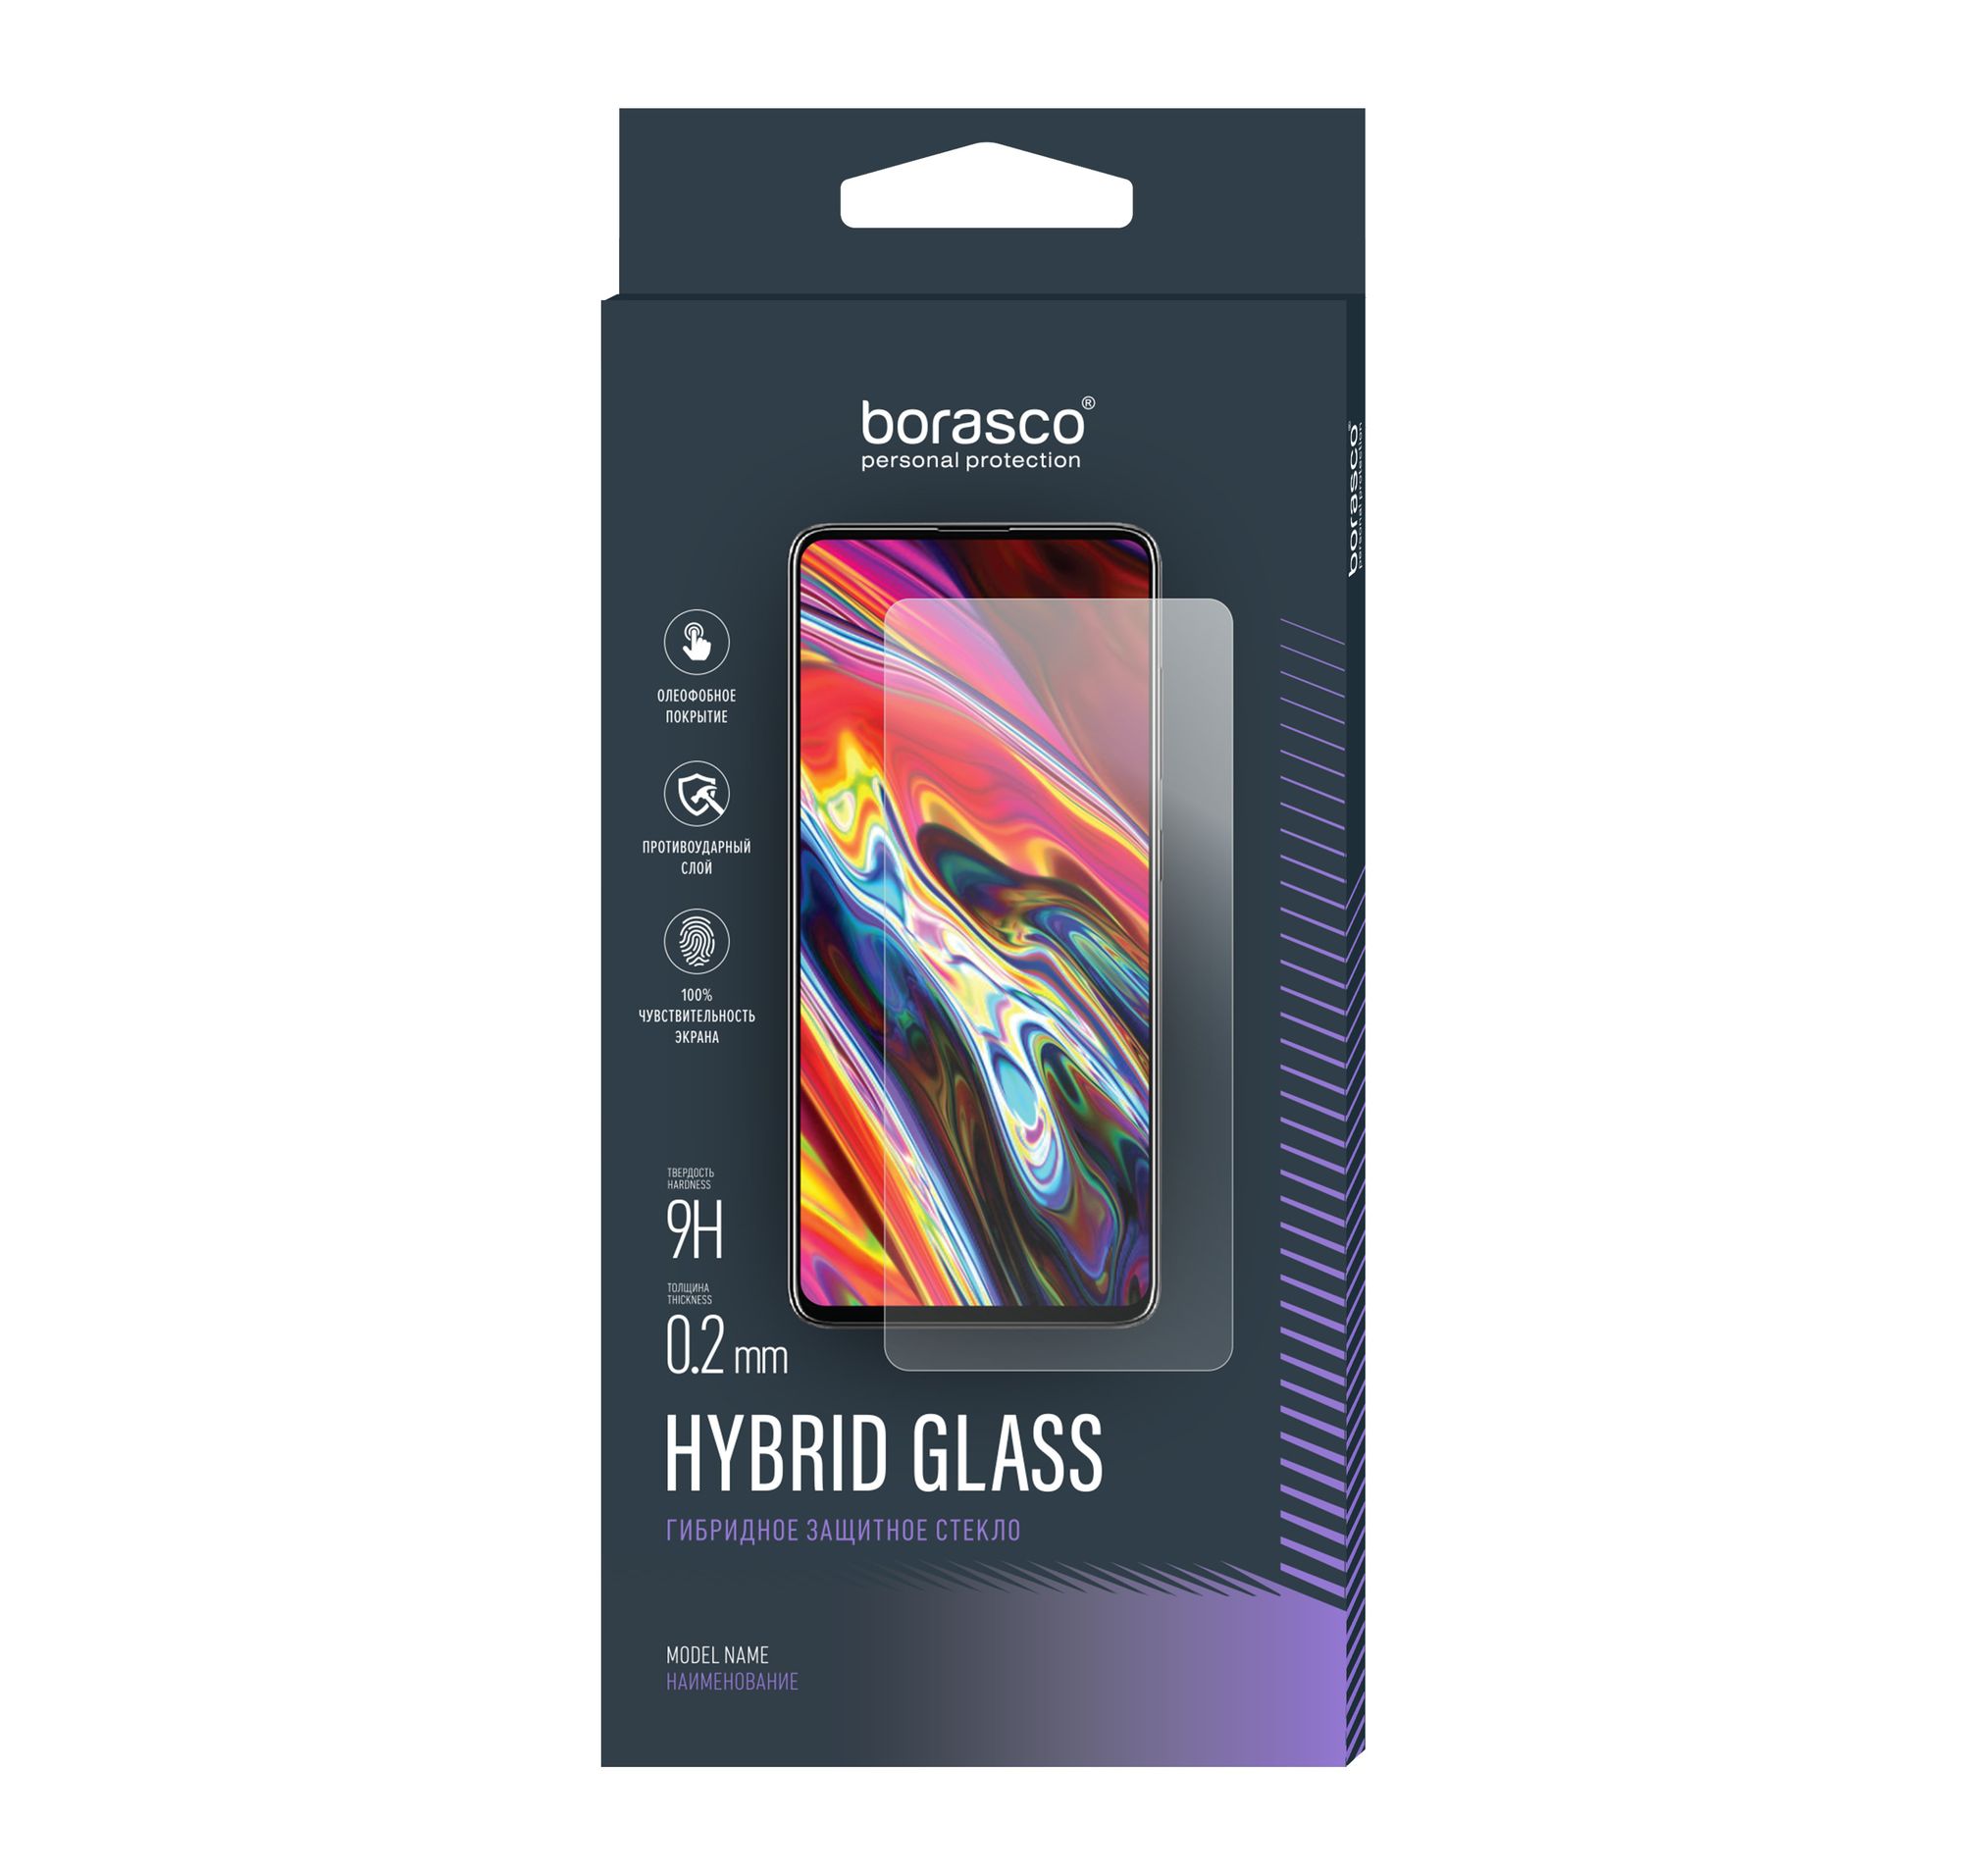 Стекло защитное Hybrid Glass VSP 0,26 мм для Huawei Y6 Prime 2018/ Y6 2018/ Honor 7C/ 7A Pro стекло защитное mediagadget huawei y6 2018 hybrid прозрачное